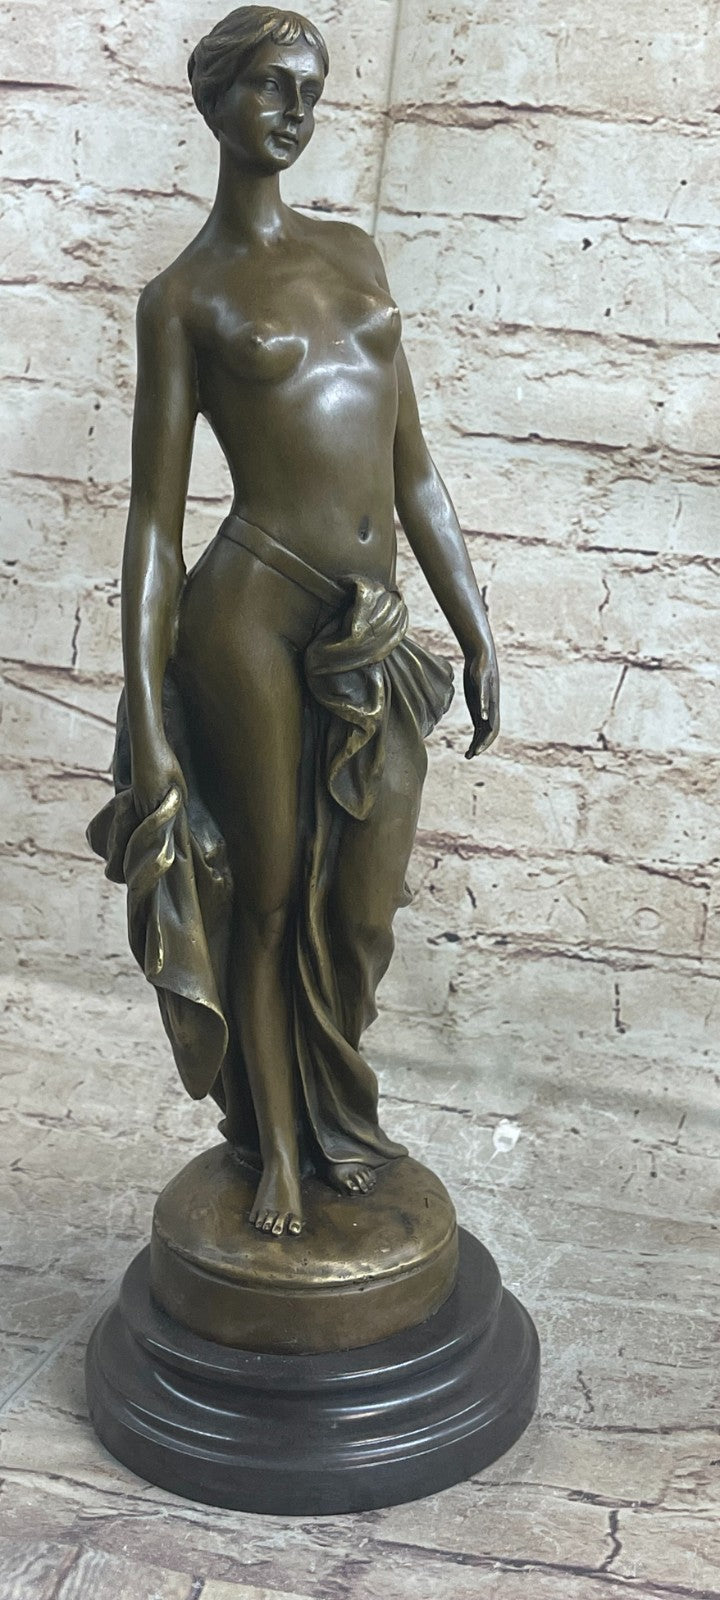 Hot Quality Nude Girl bronze Sculpture Handcrafted Statue Museum Gilt Deco Art